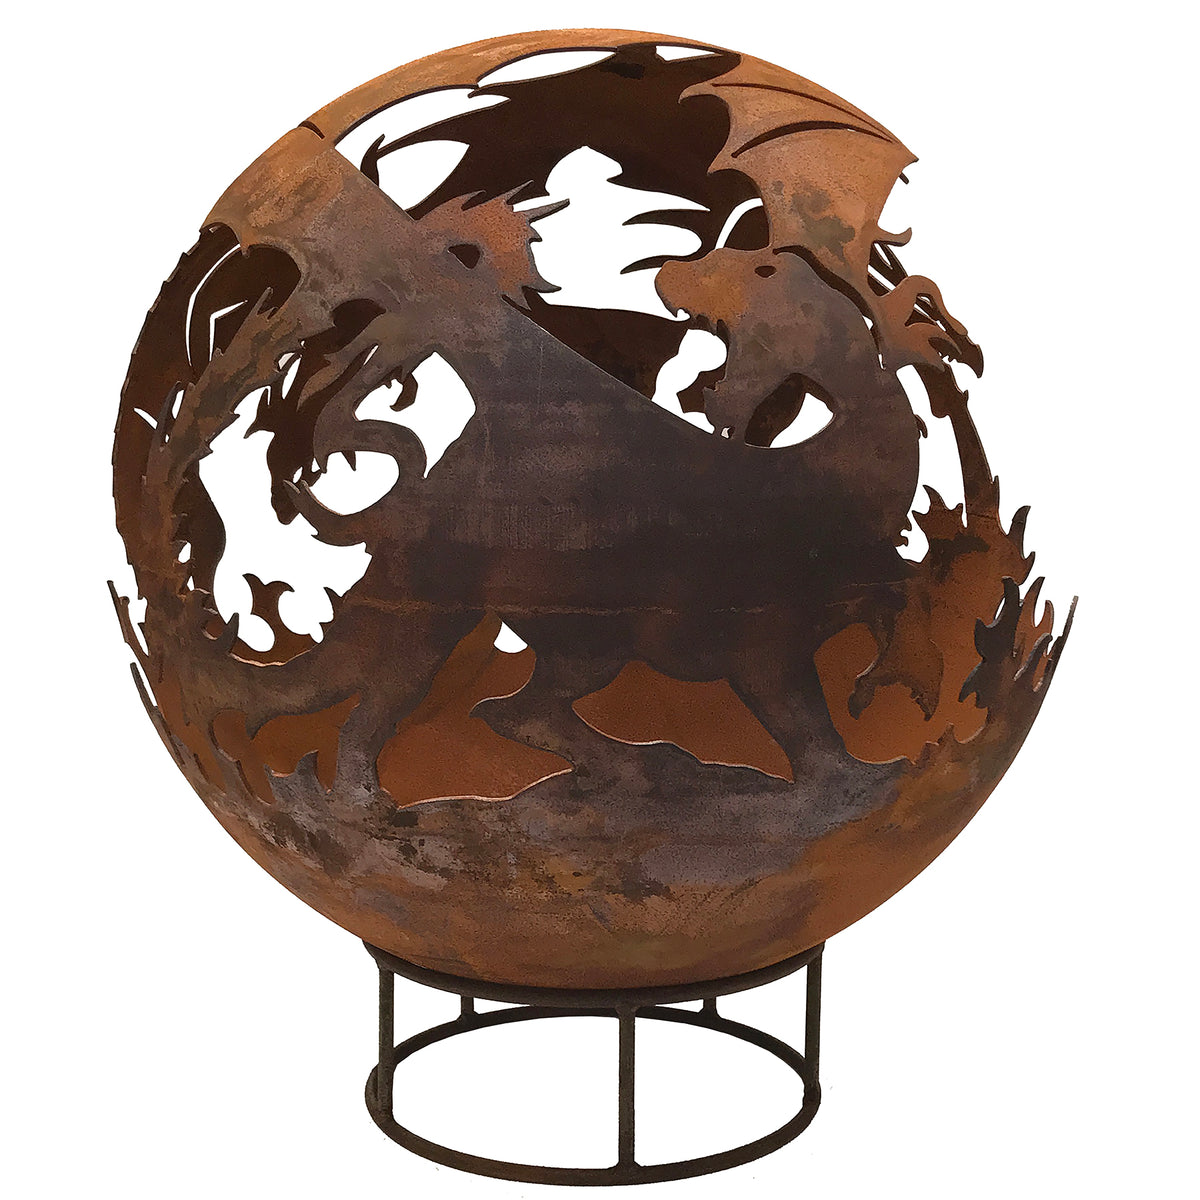 Garden Fire Ball 70cm Dragon Design with Rust Finish